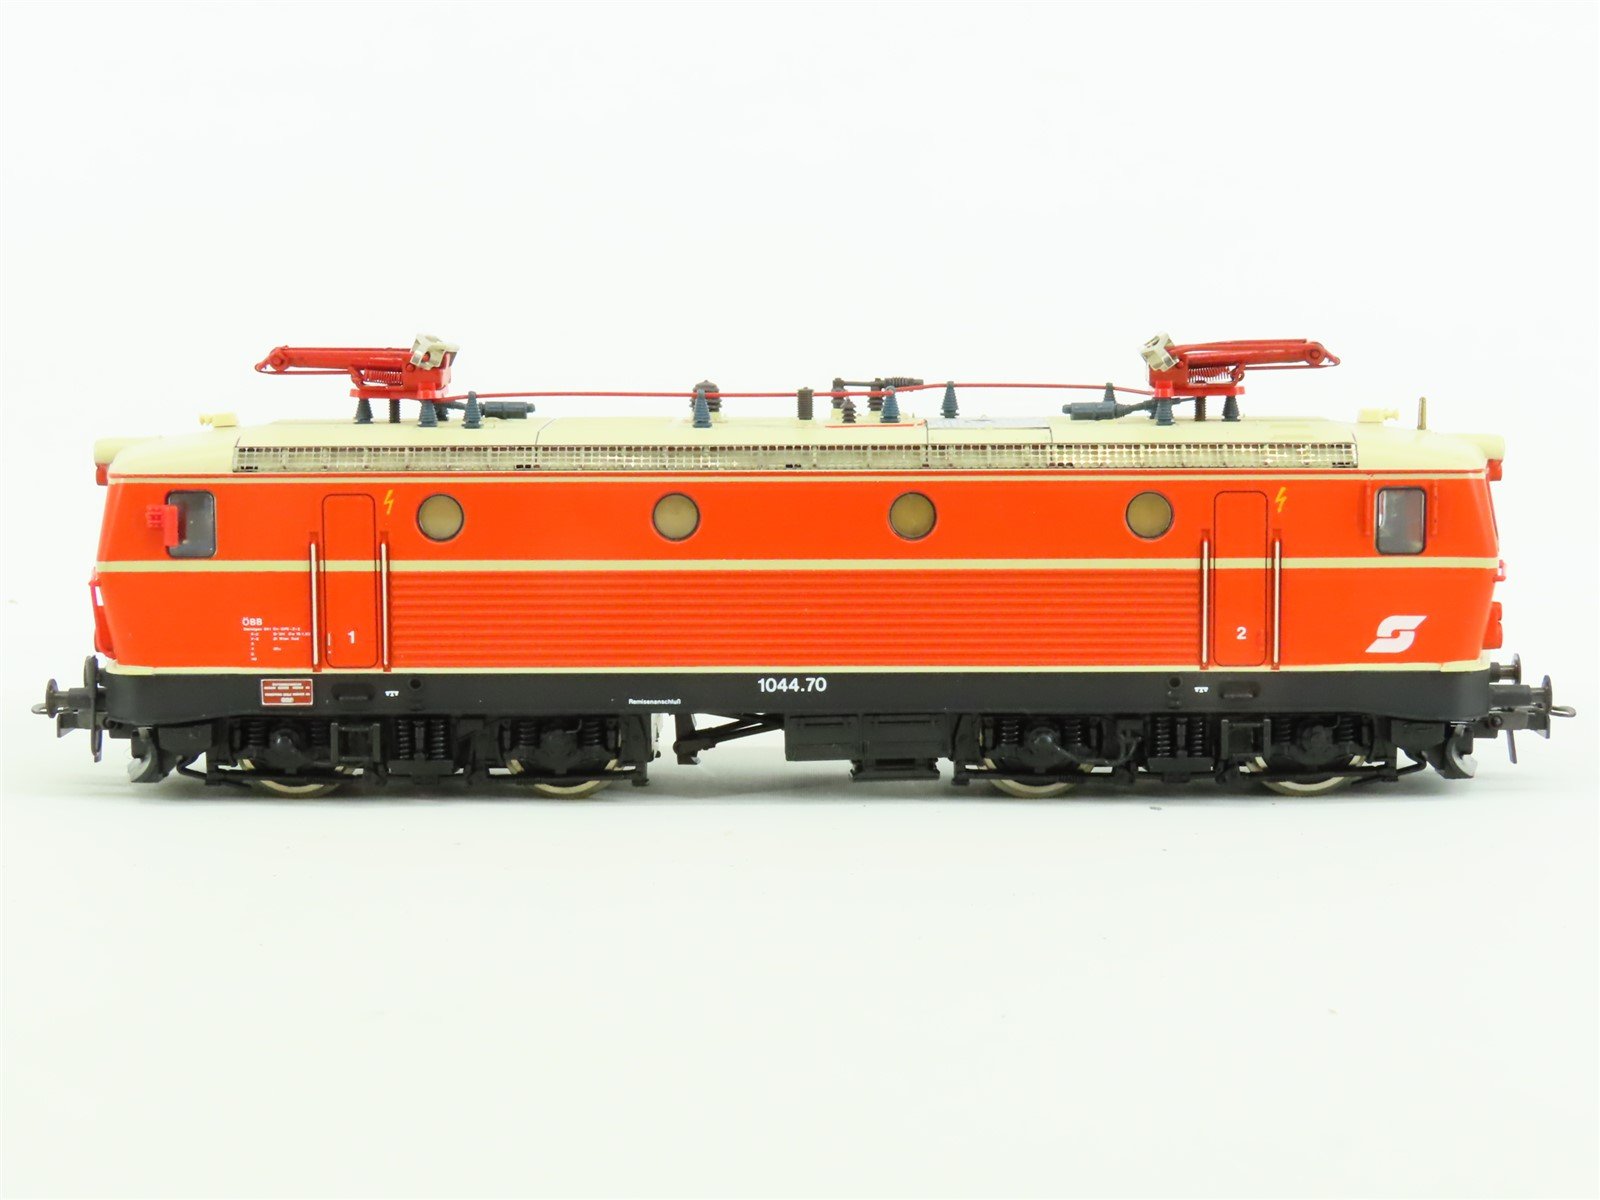 HO Scale Roco OBB Austrian Federal Class 1044 Electric Locomotive #70